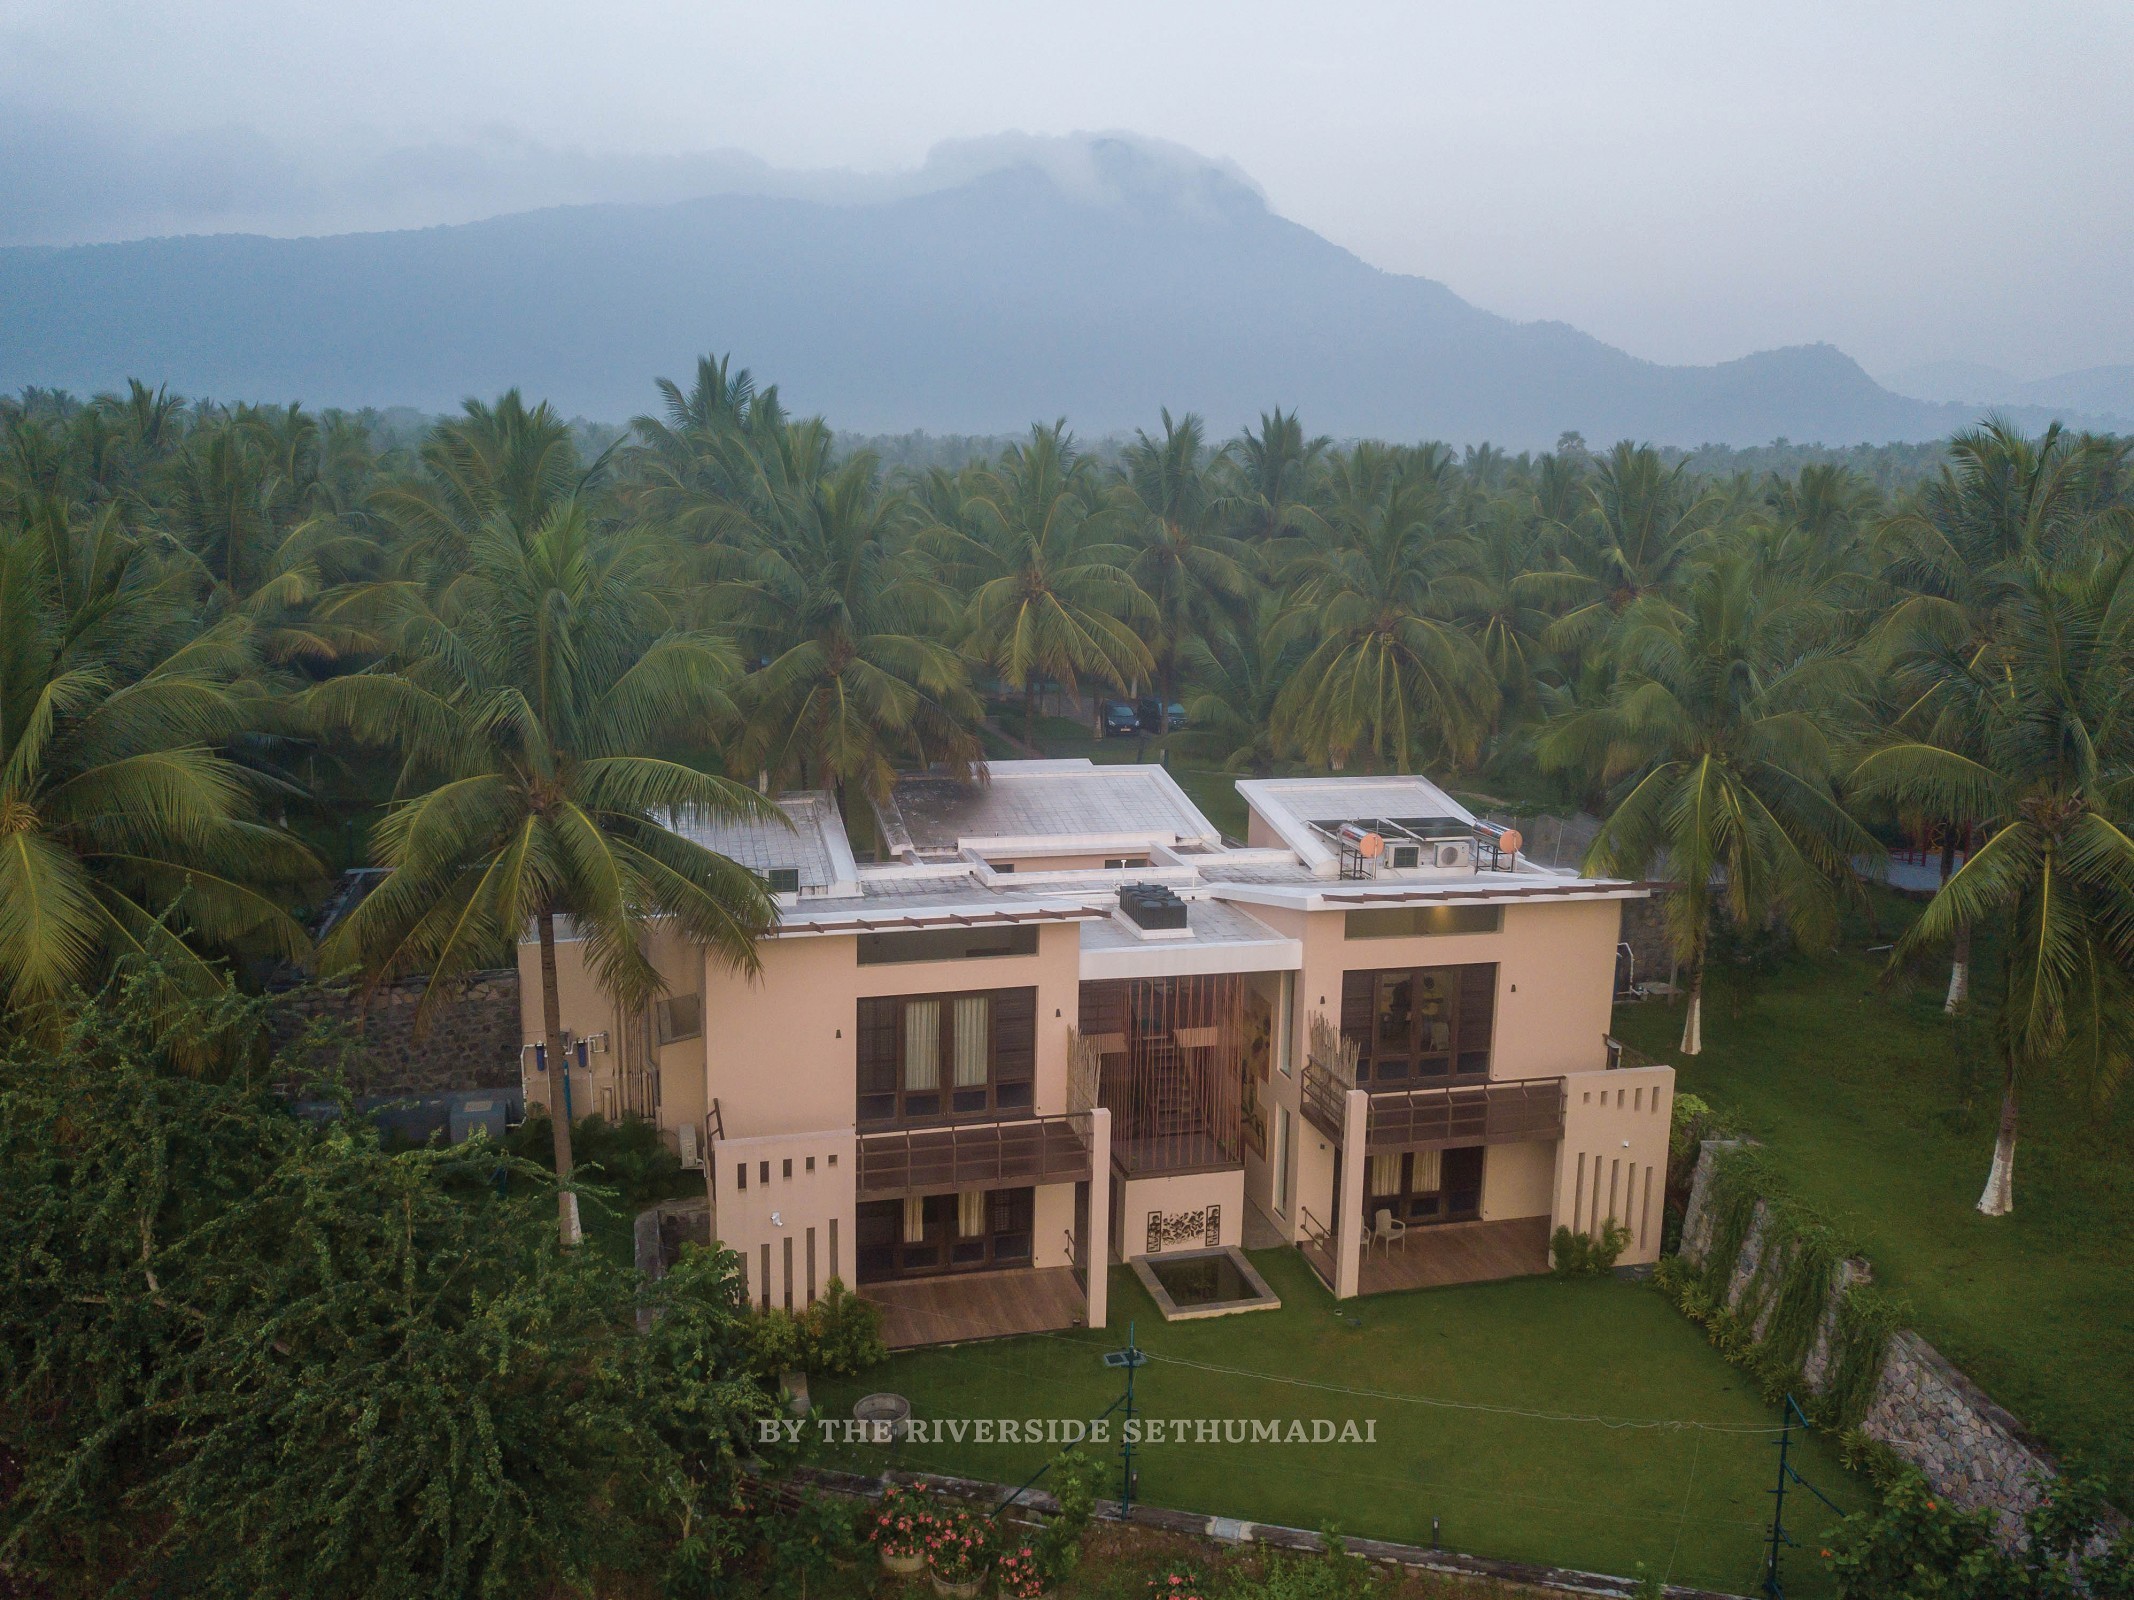 Best Resort in Coimbatore | By the Riverside is the budget friendly resort in Coimbatore